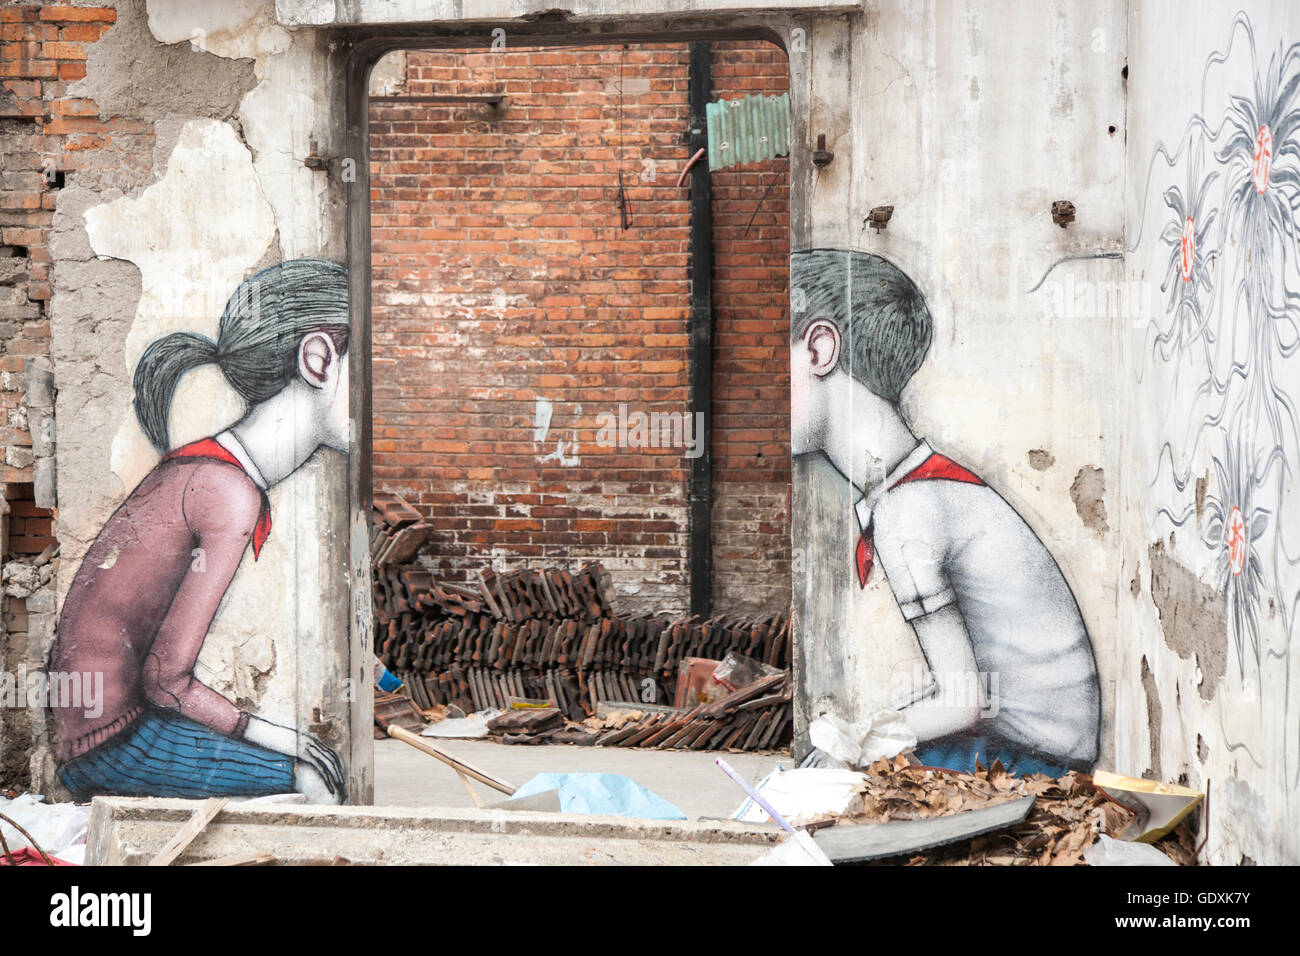 Street art on walls of demolished building. Stock Photo